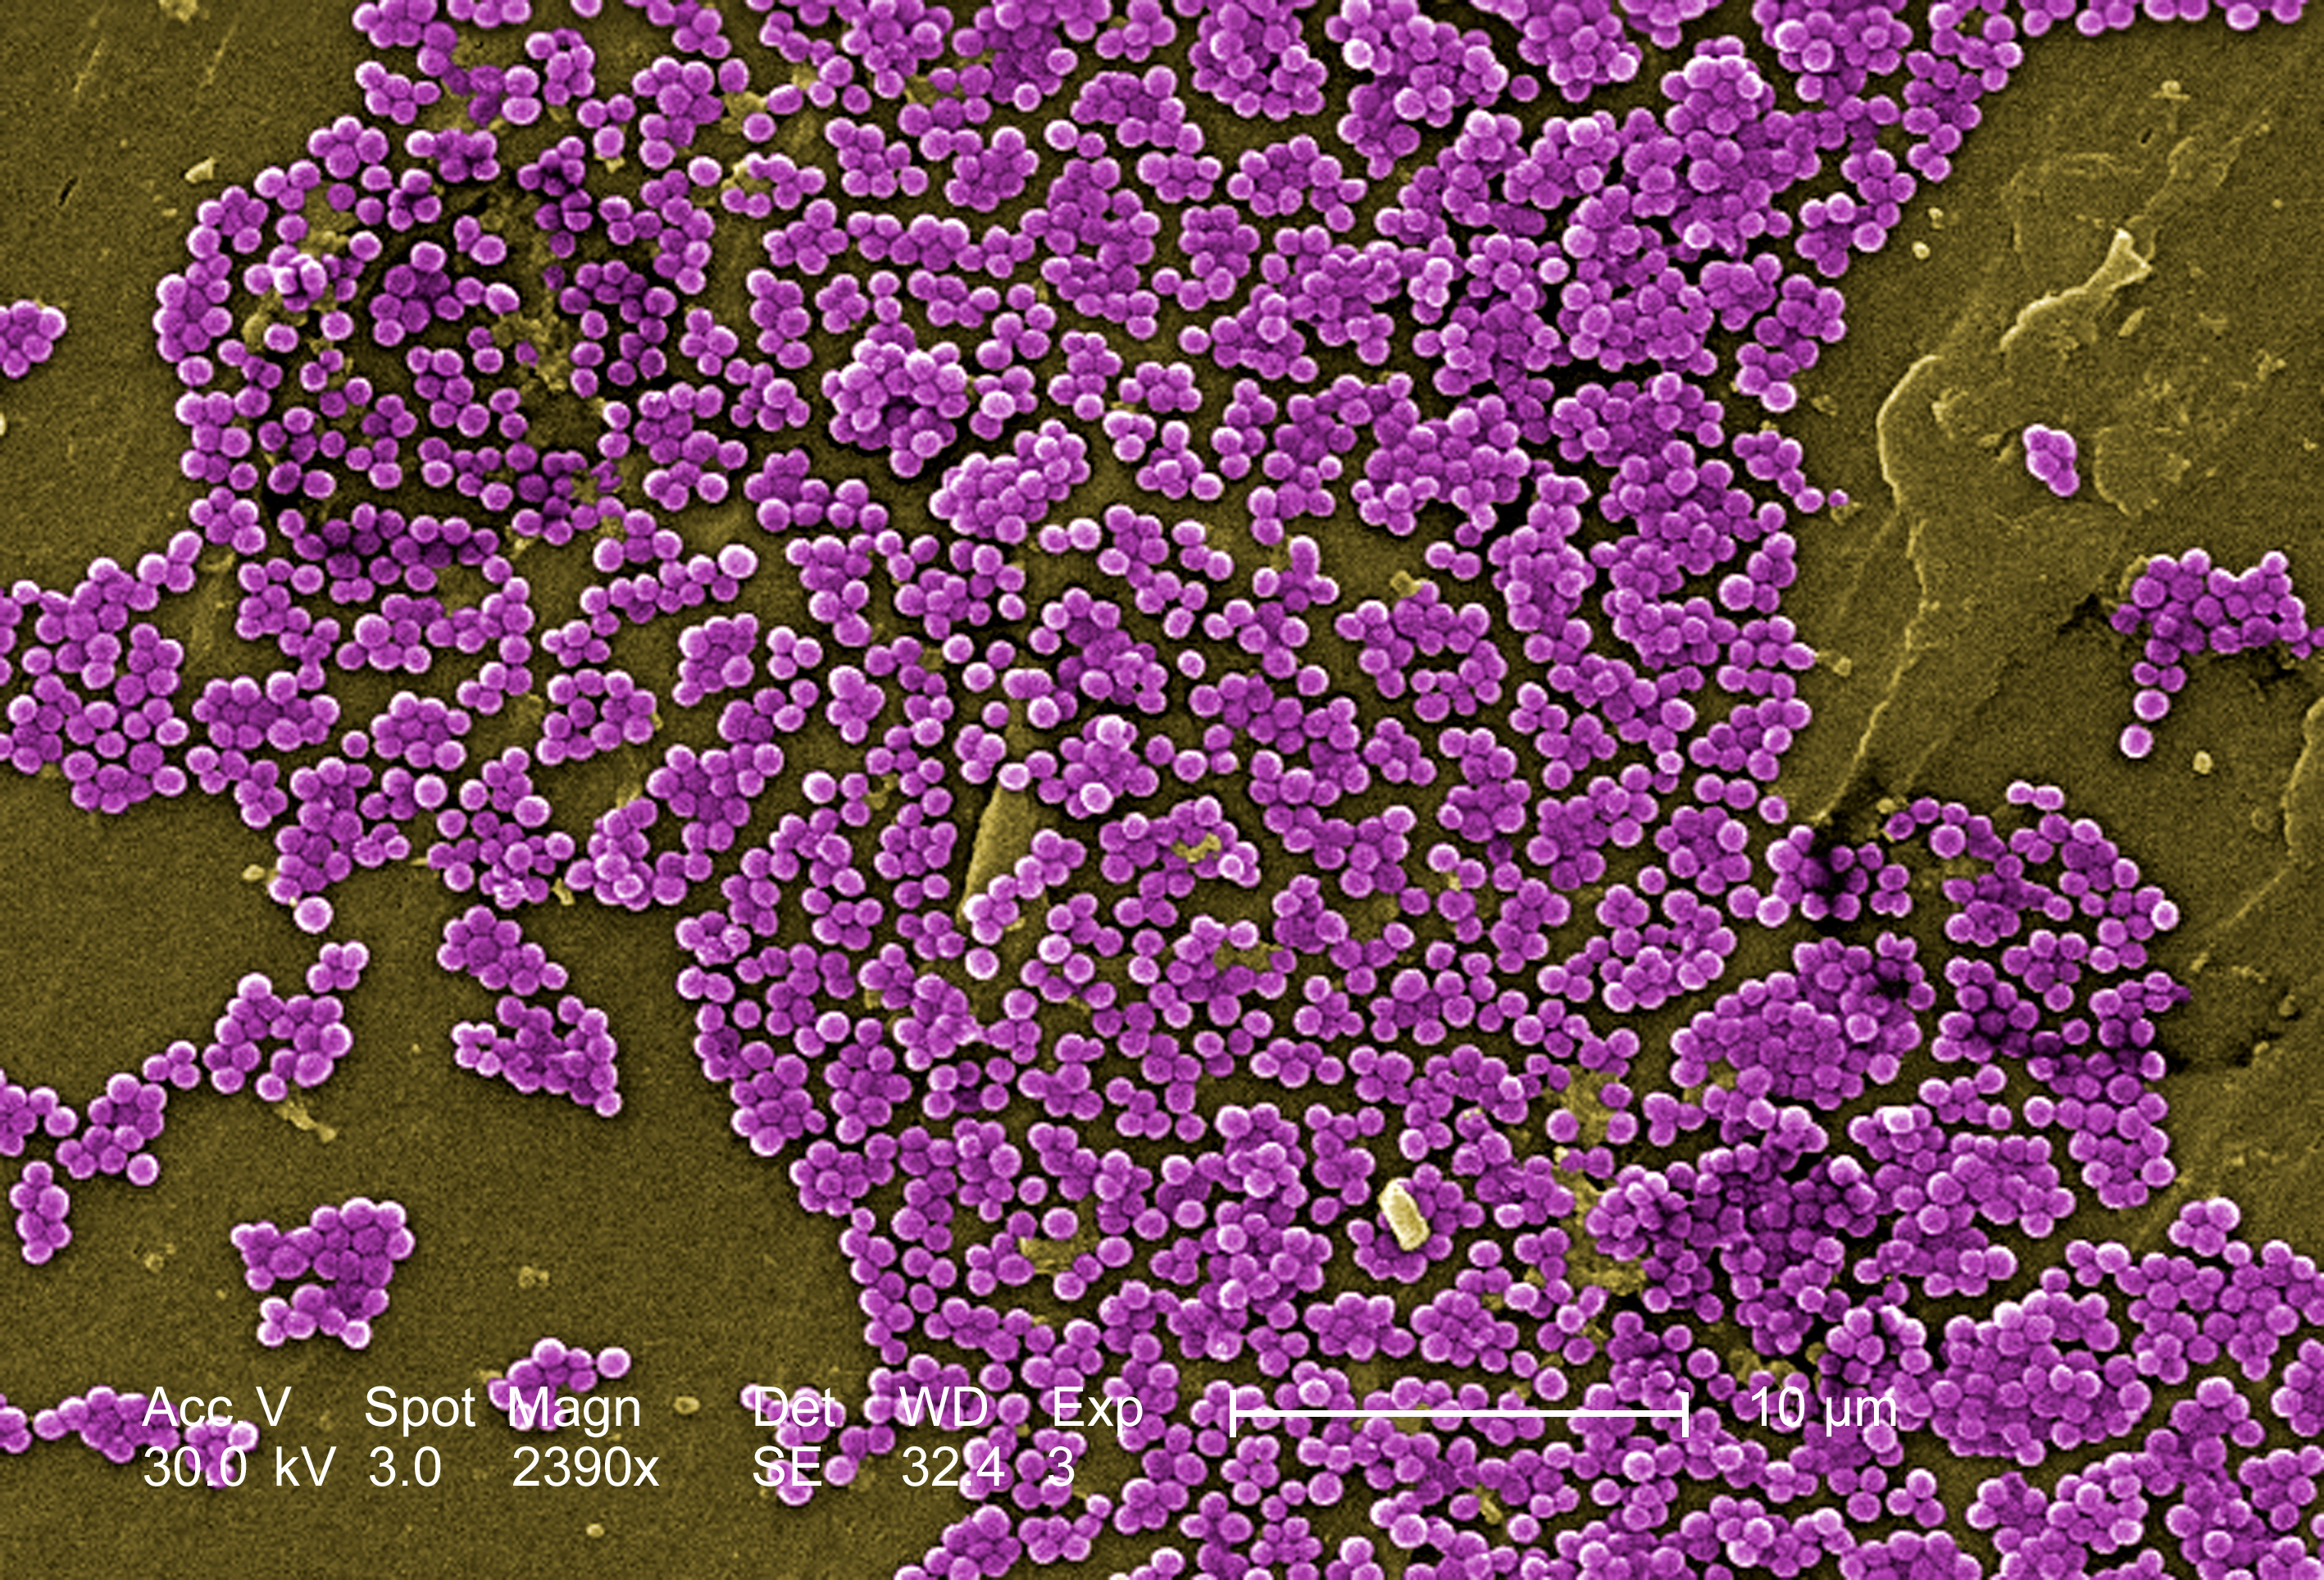 methicillin resistant staphylococcus aureus photos